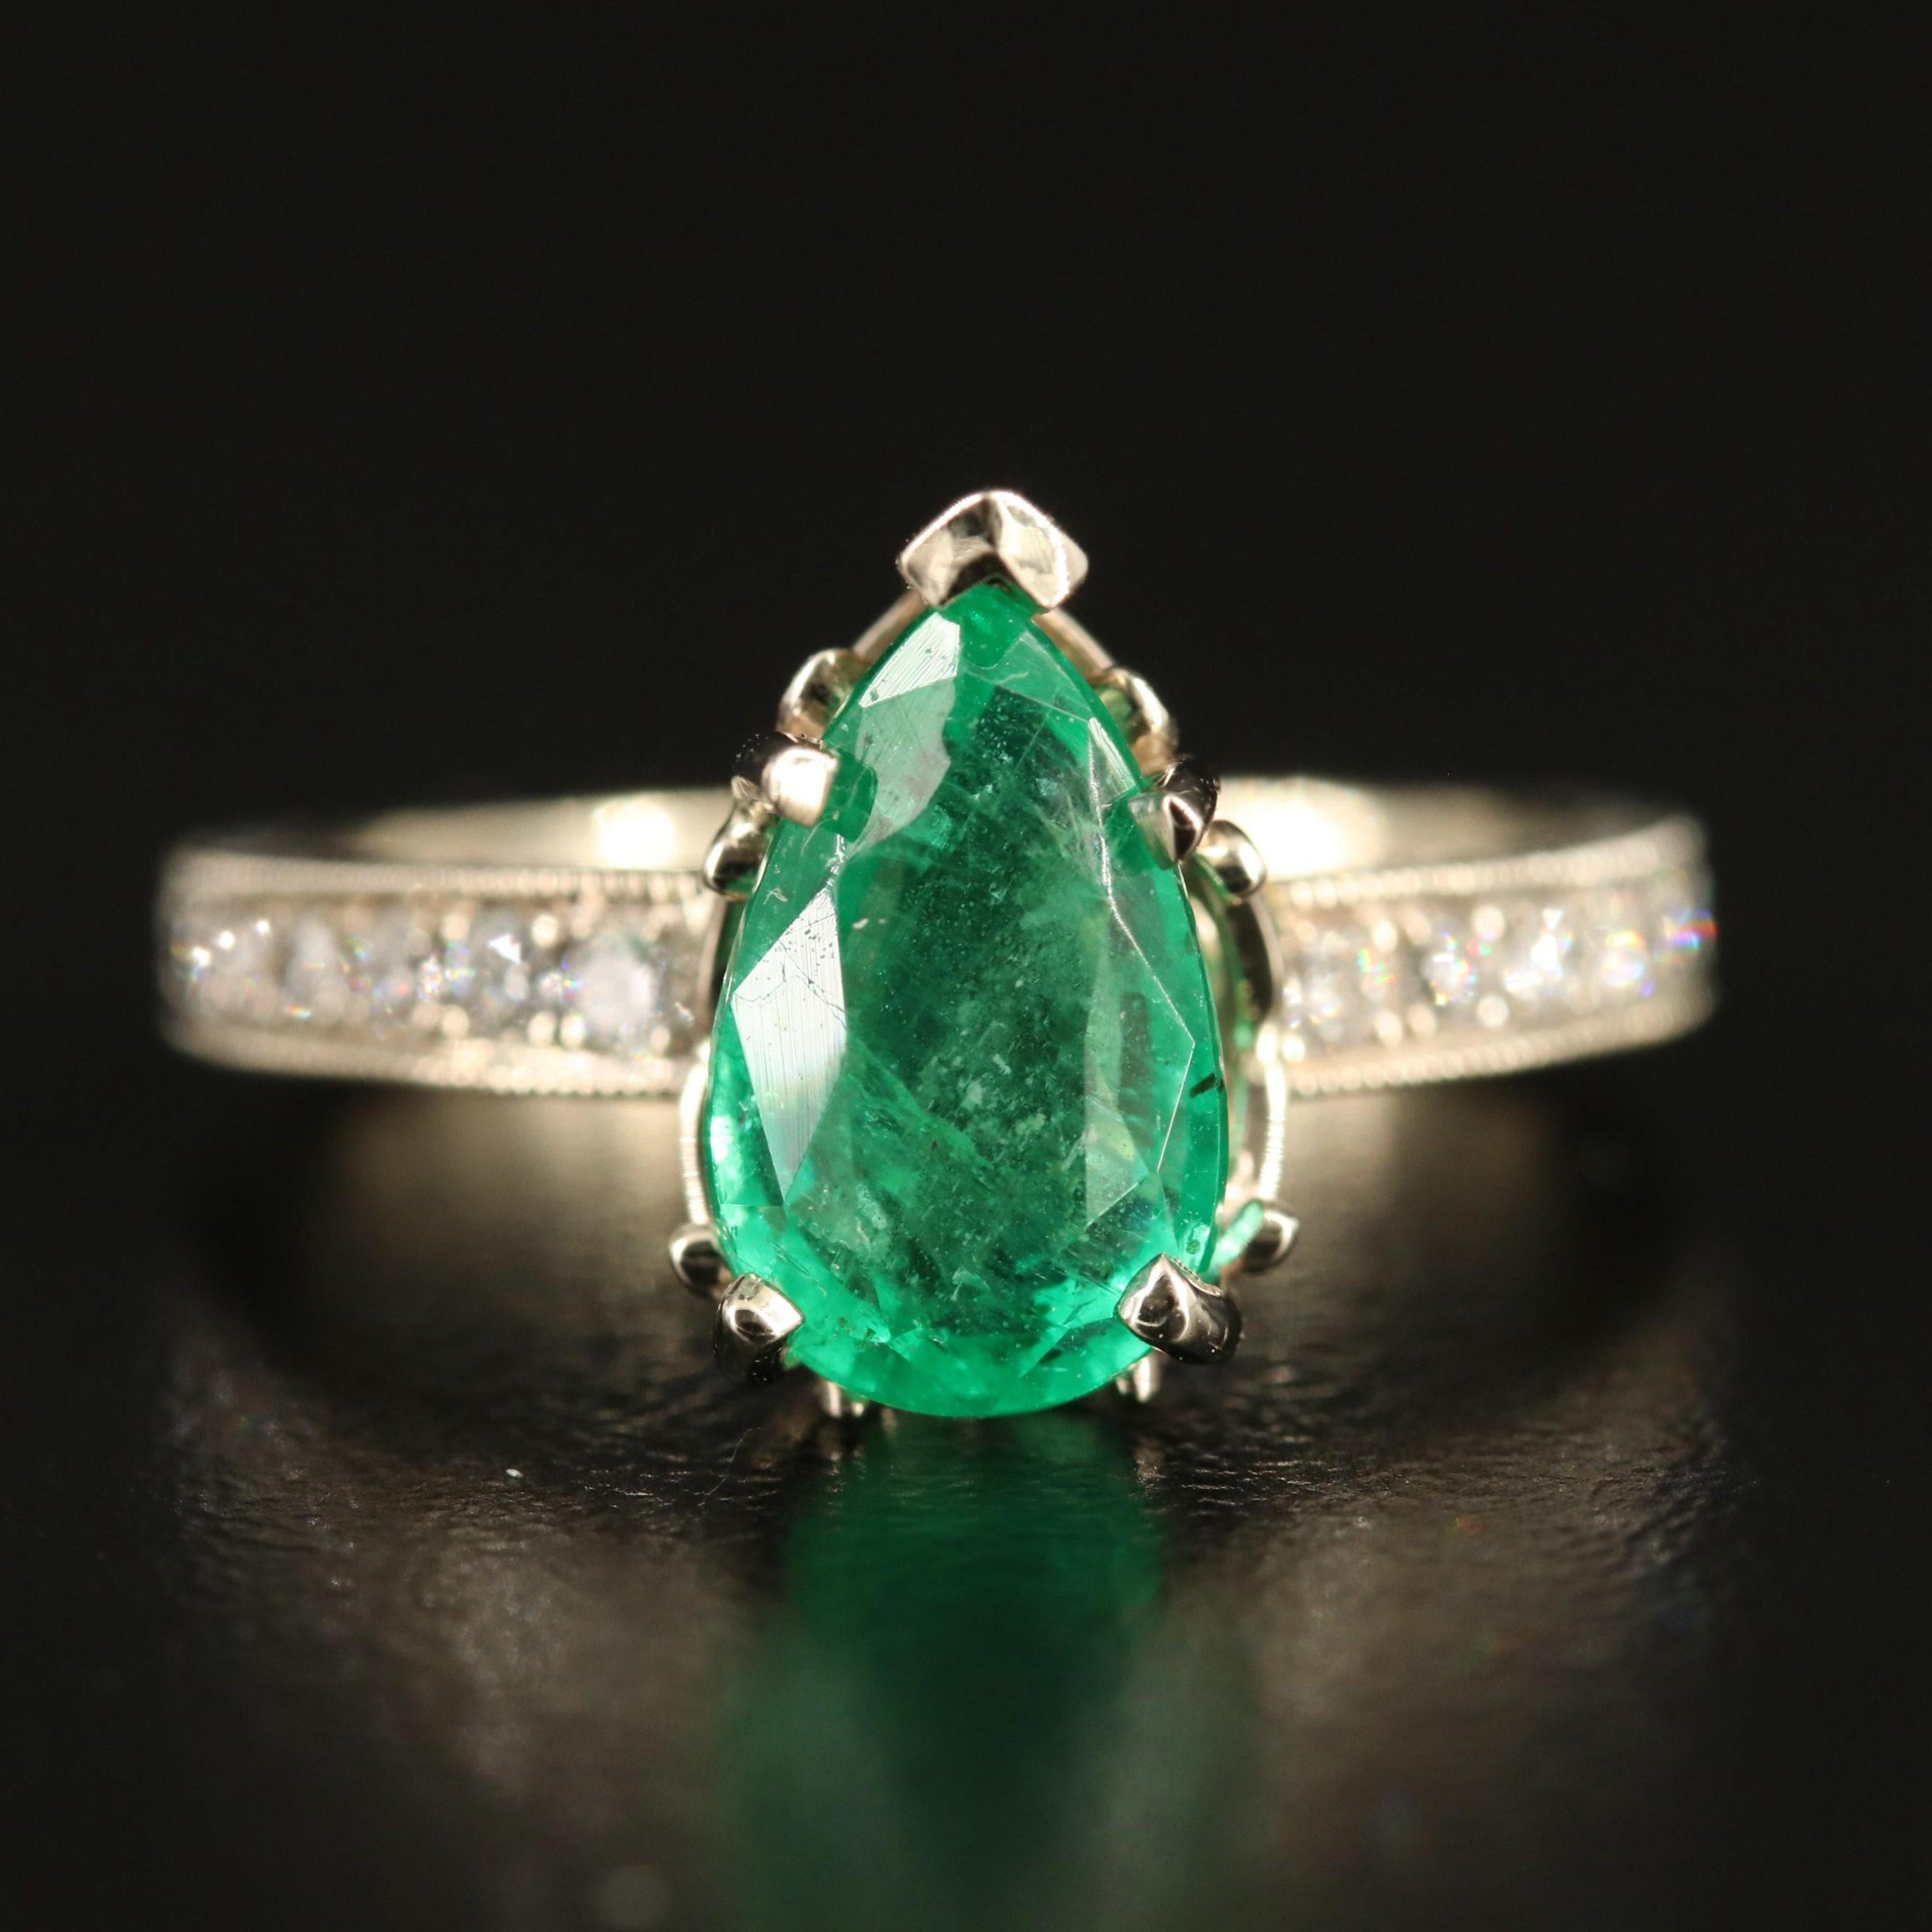 For Sale:  1.5 Carat Pear Cut Emerald Diamond Engagement Ring Minimalist Gold Wedding Ring 6